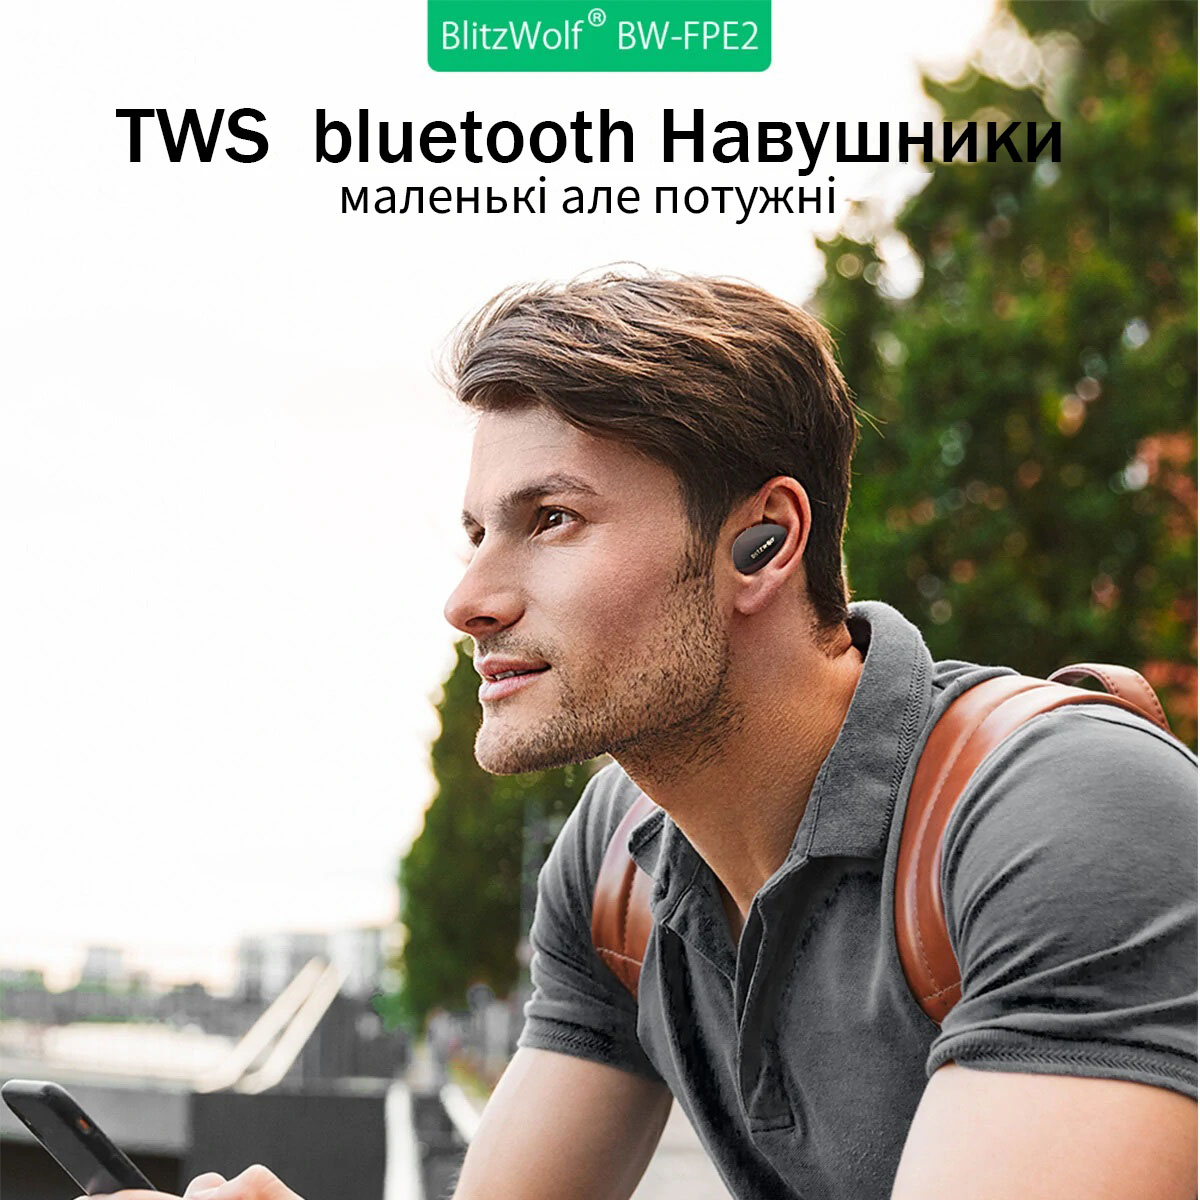 Навушники BlitzWolf BW-FPE2 для Android, iPhone, iPad Black